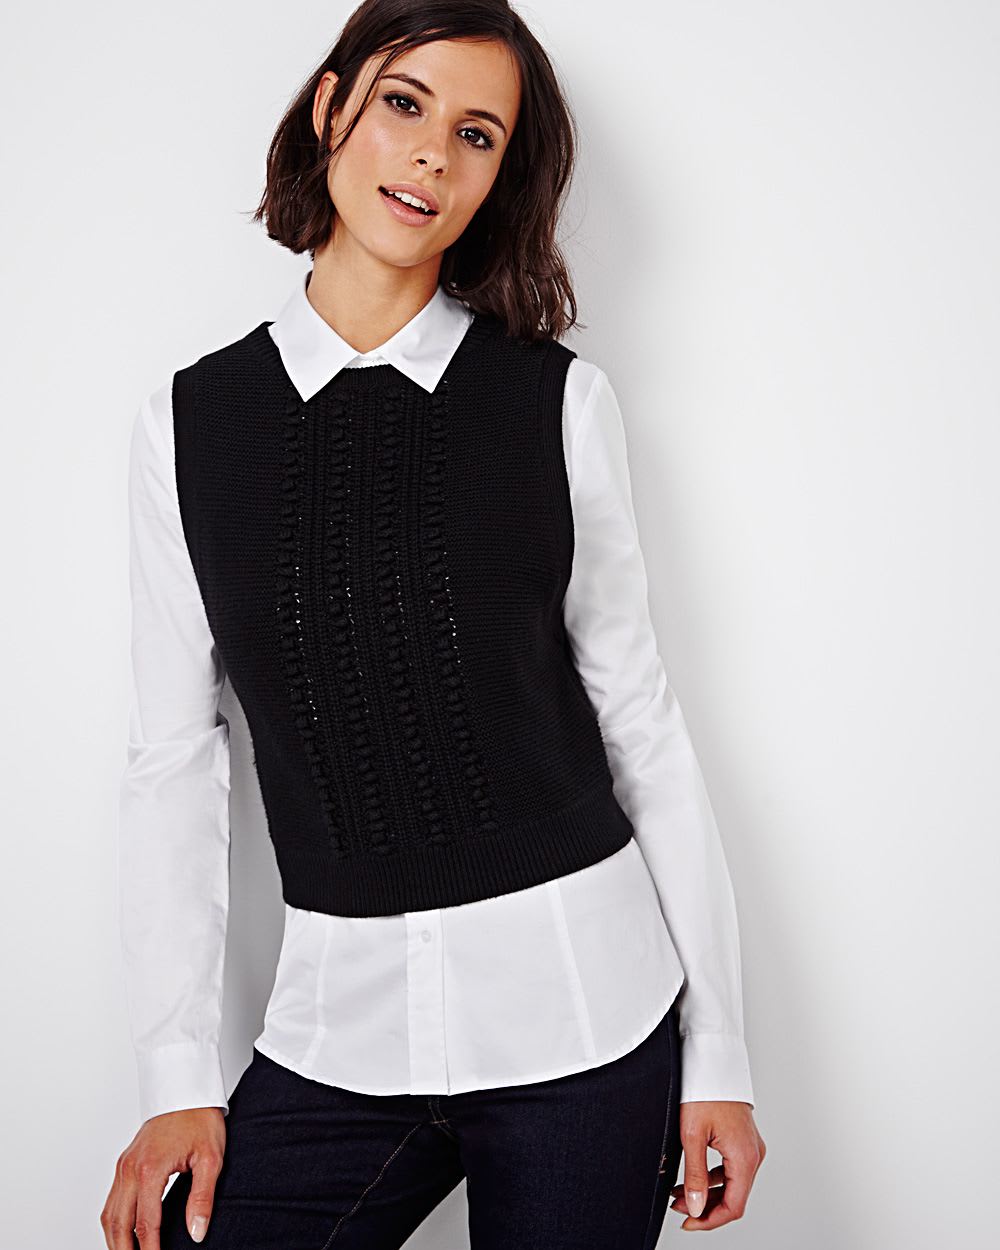 Sleeveless sweater vest | RW&CO.